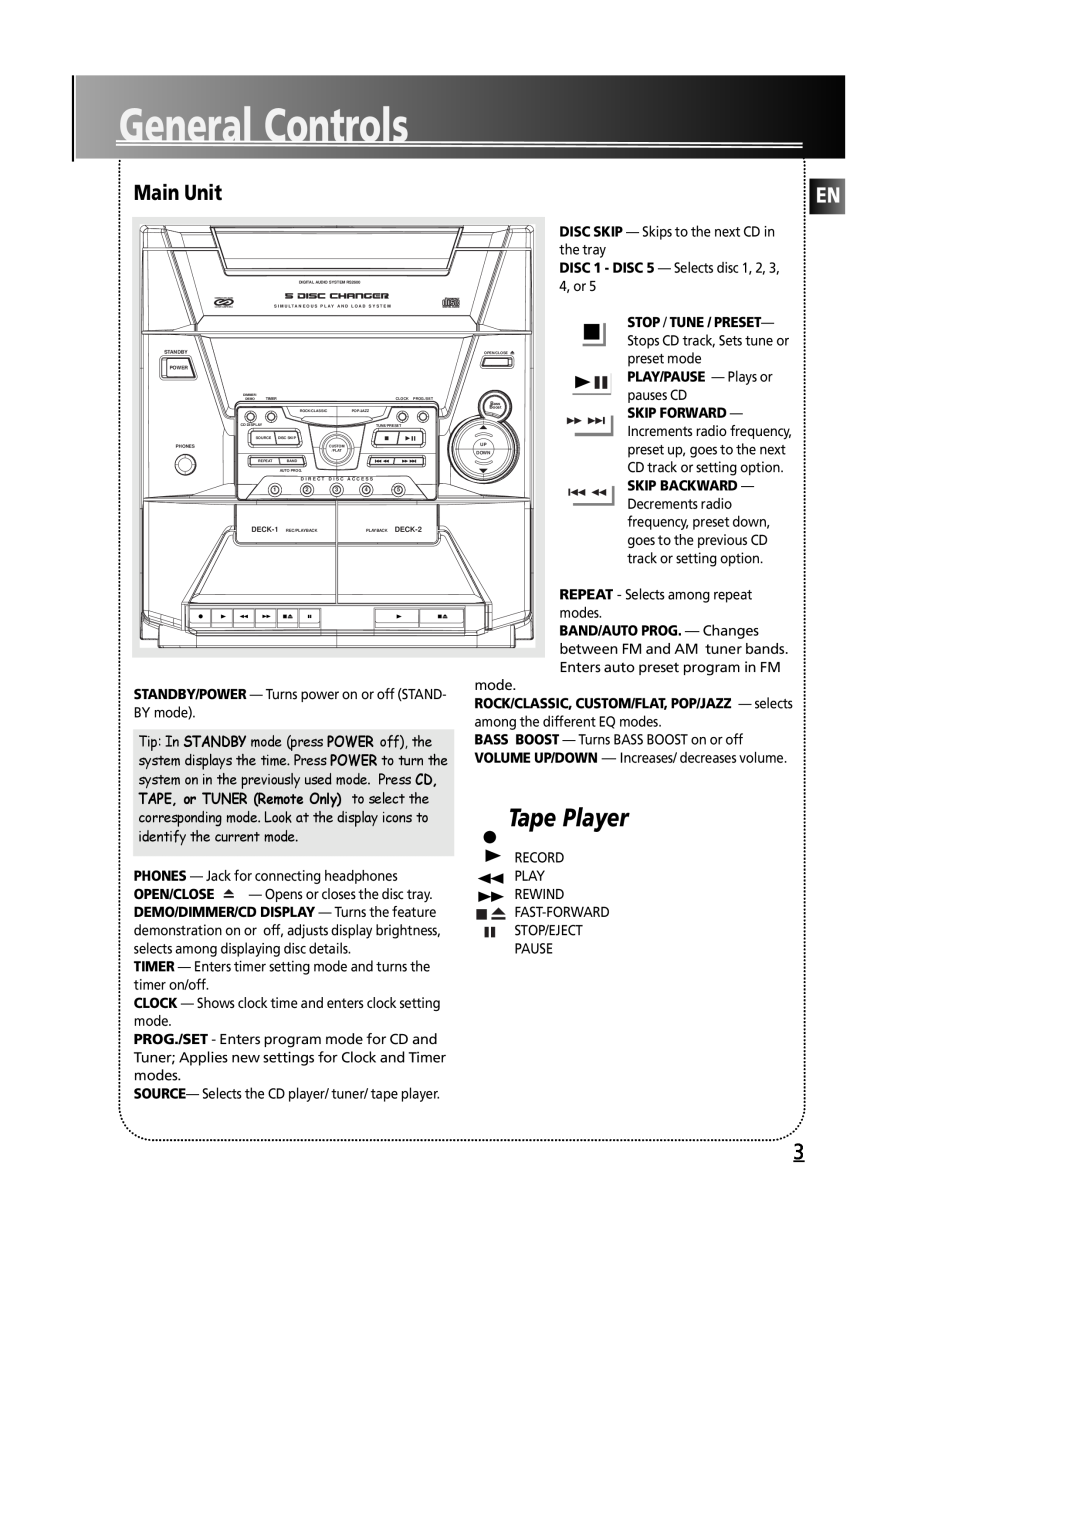 Technicolor - Thomson RS2600 manual General Controls, Main Unit, Tape Player 